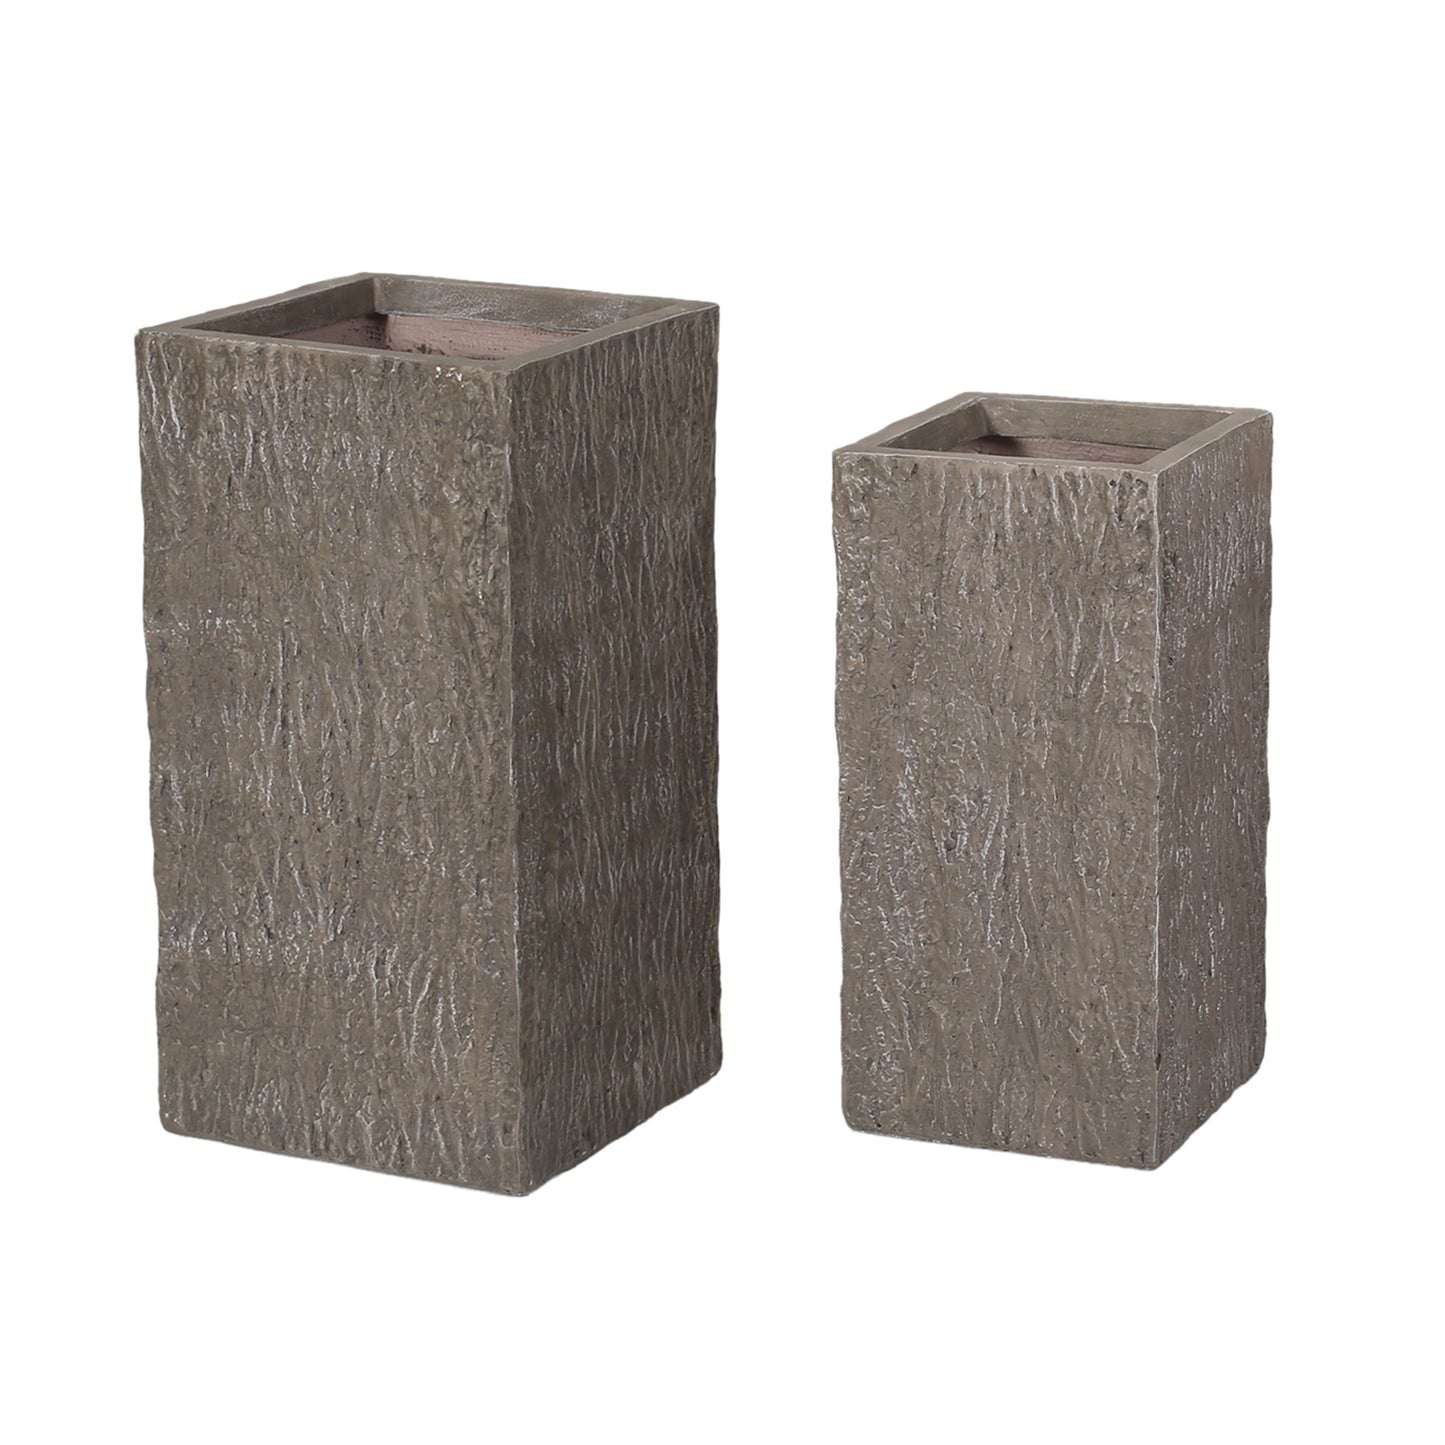 Berkamn Outdoor Large and Medium Cast Stone Planters, Set of 2, Brown Wood